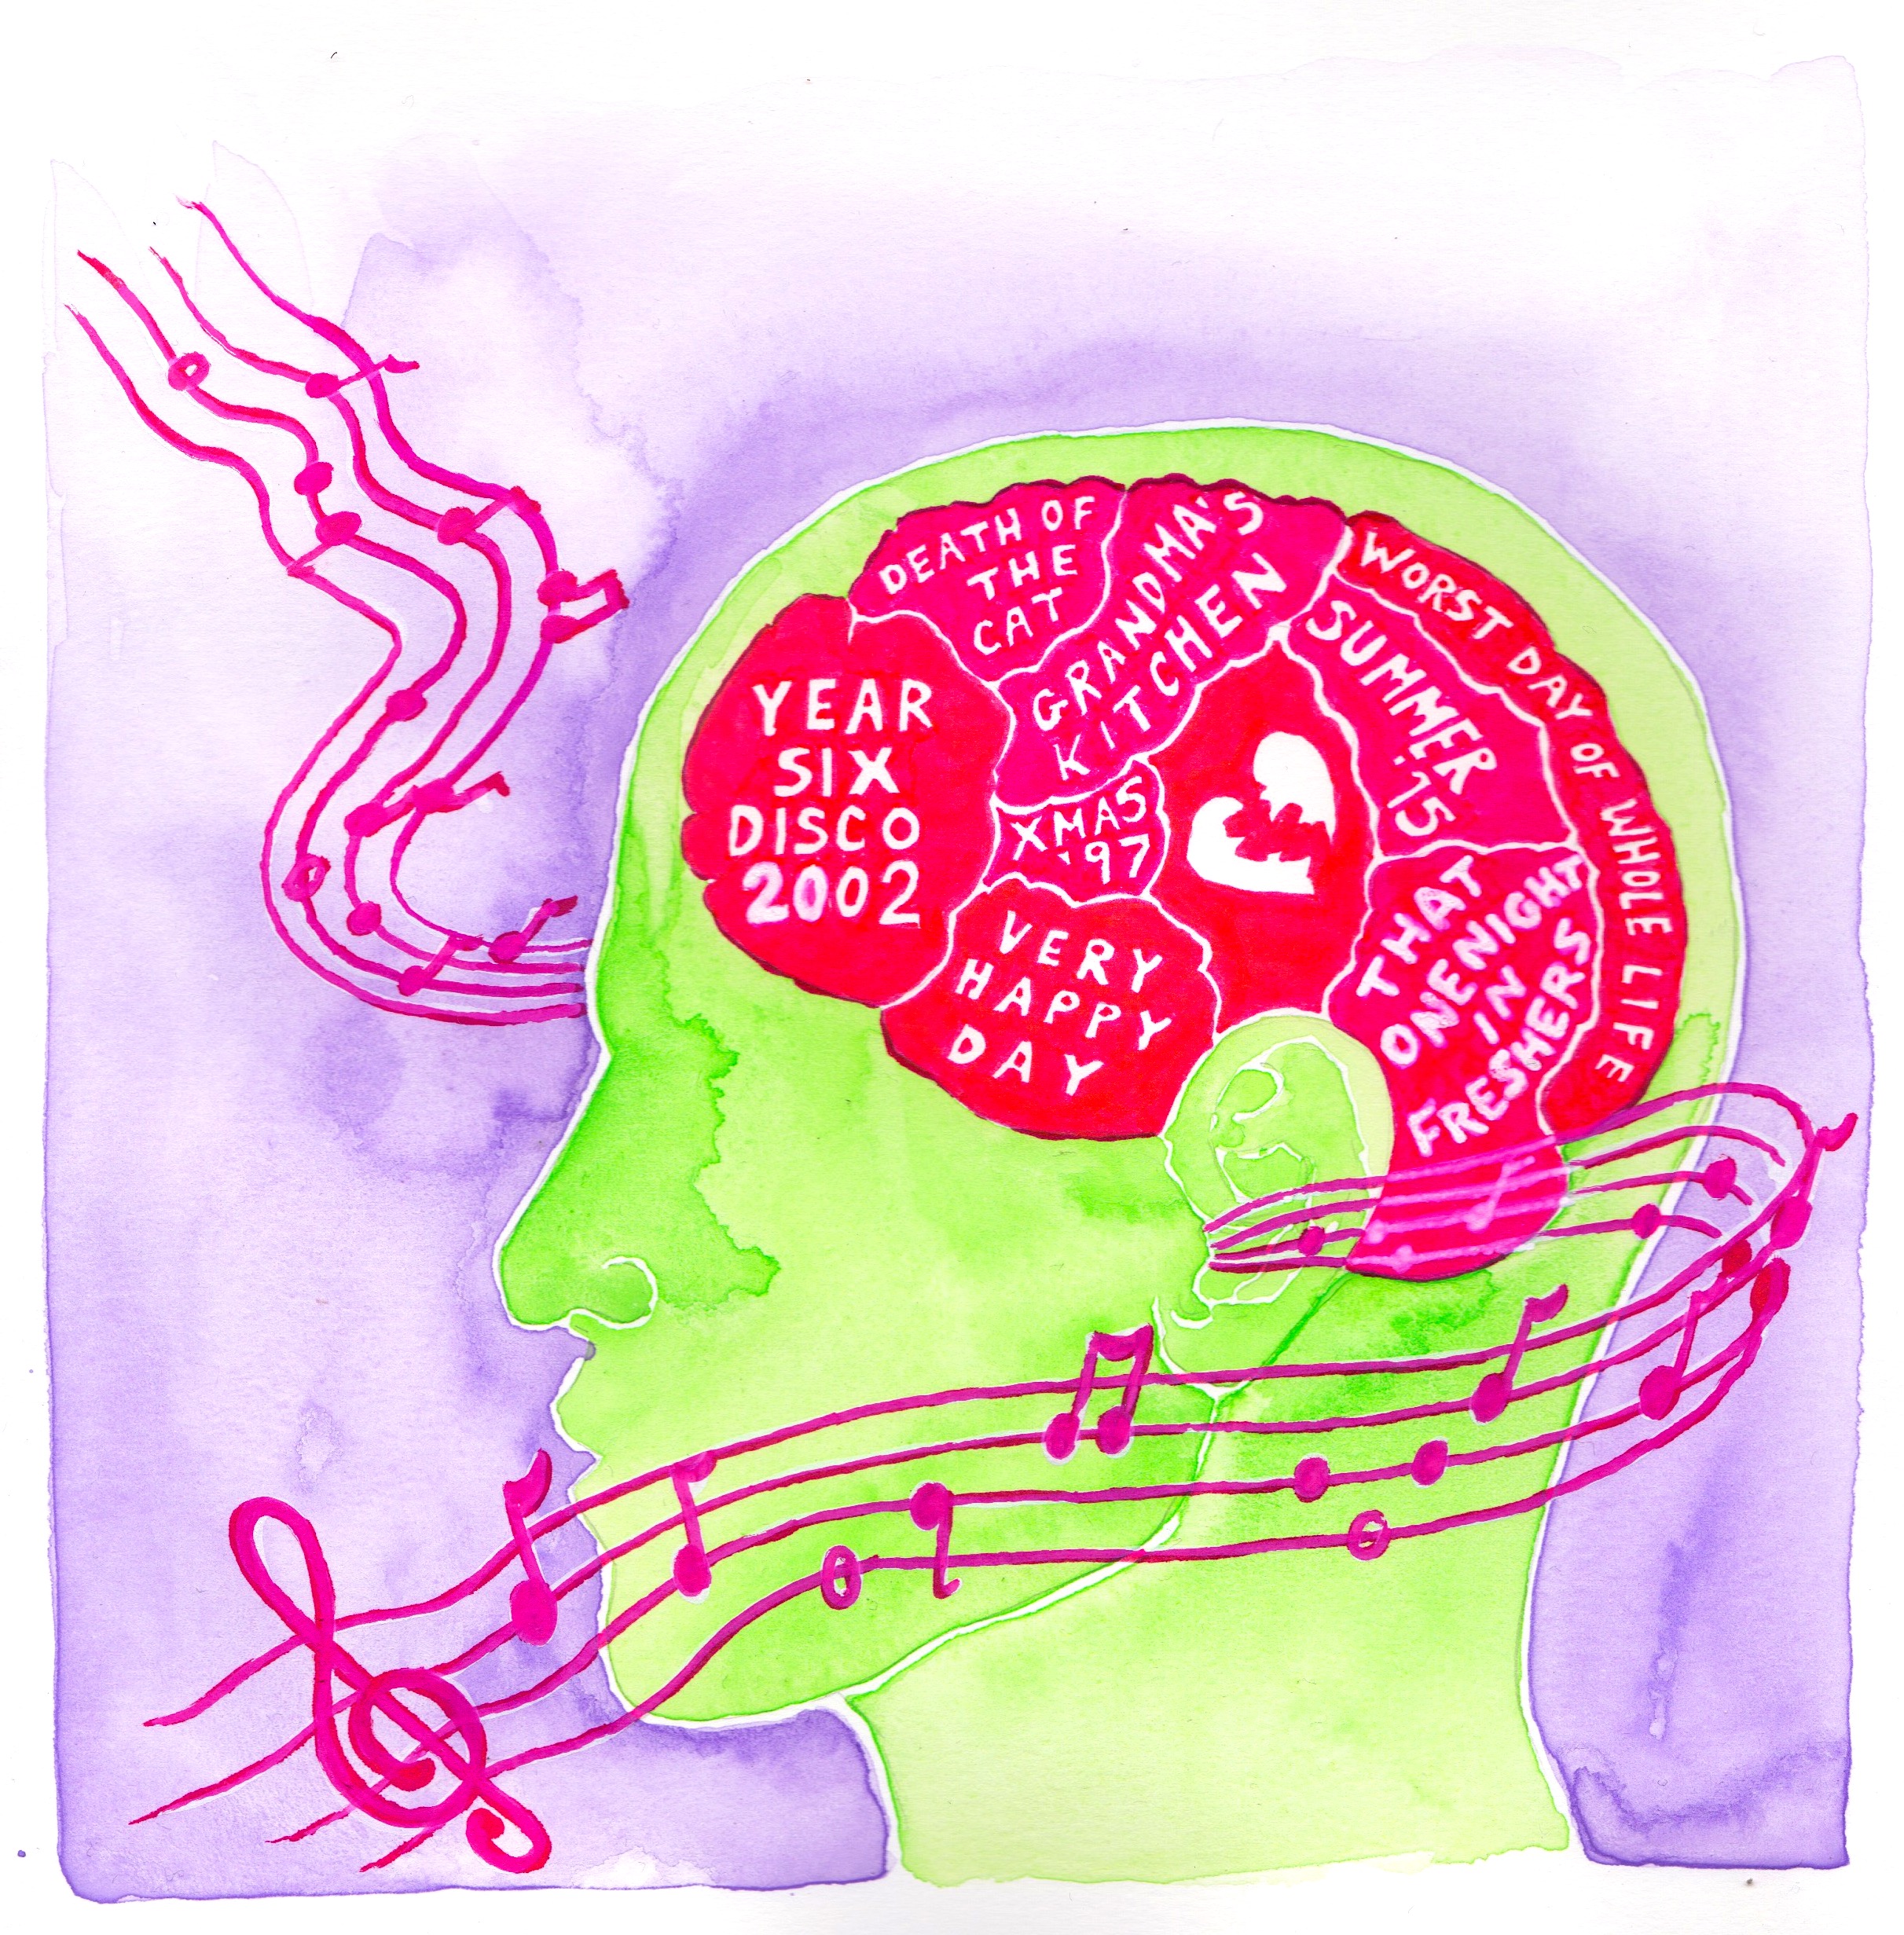 Music's effect on brain